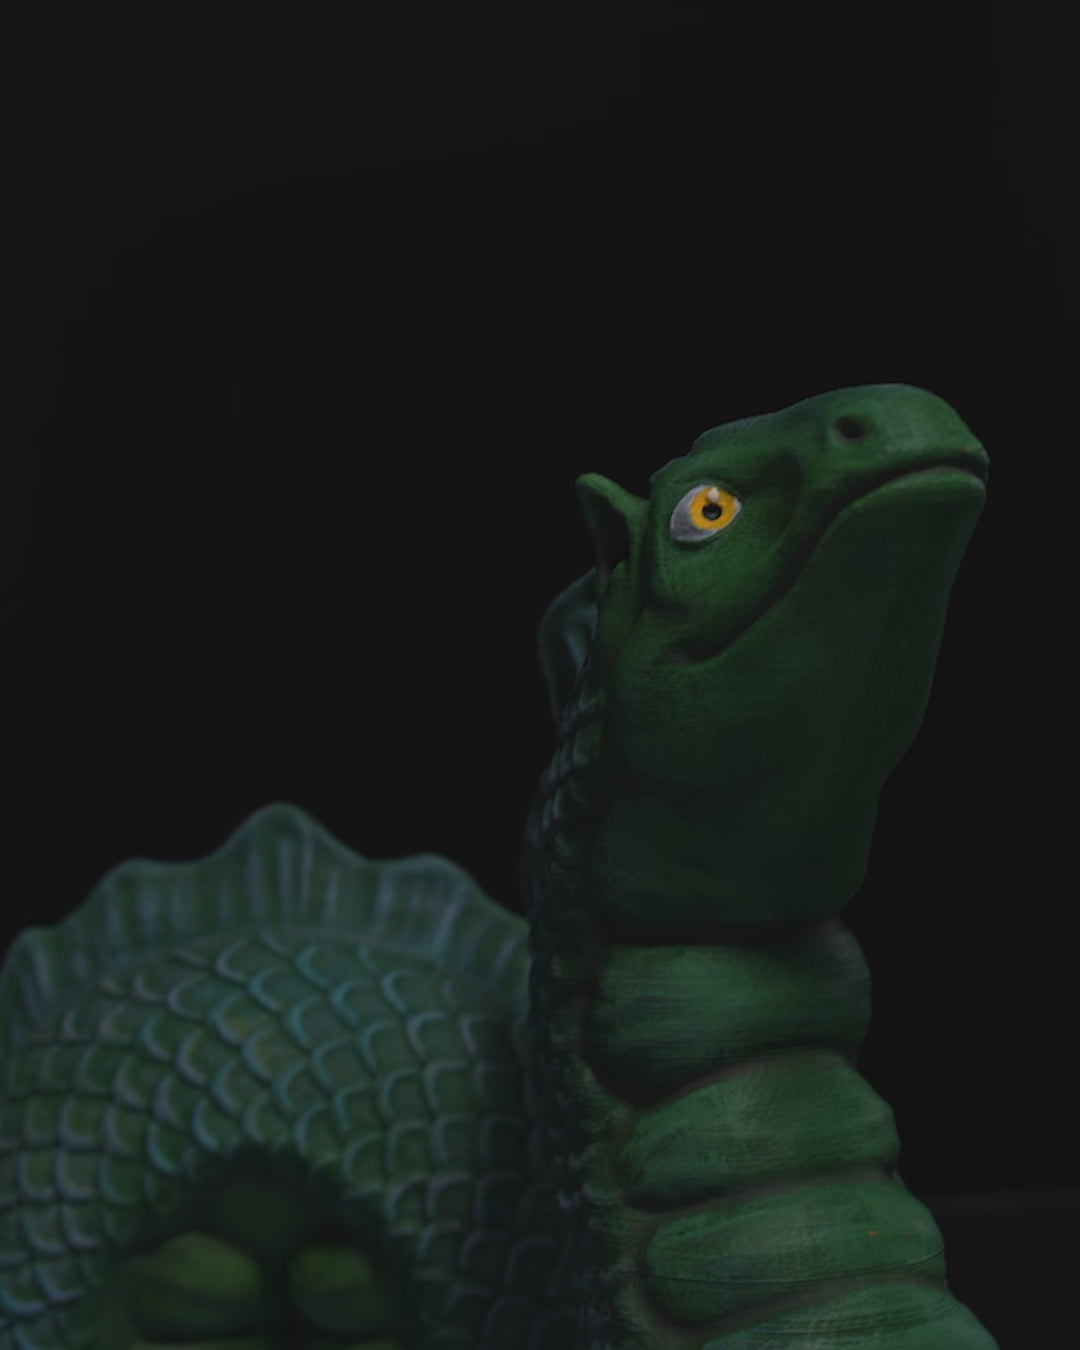 Nessie, the Loch Ness Monster | 3D Printer Model Files